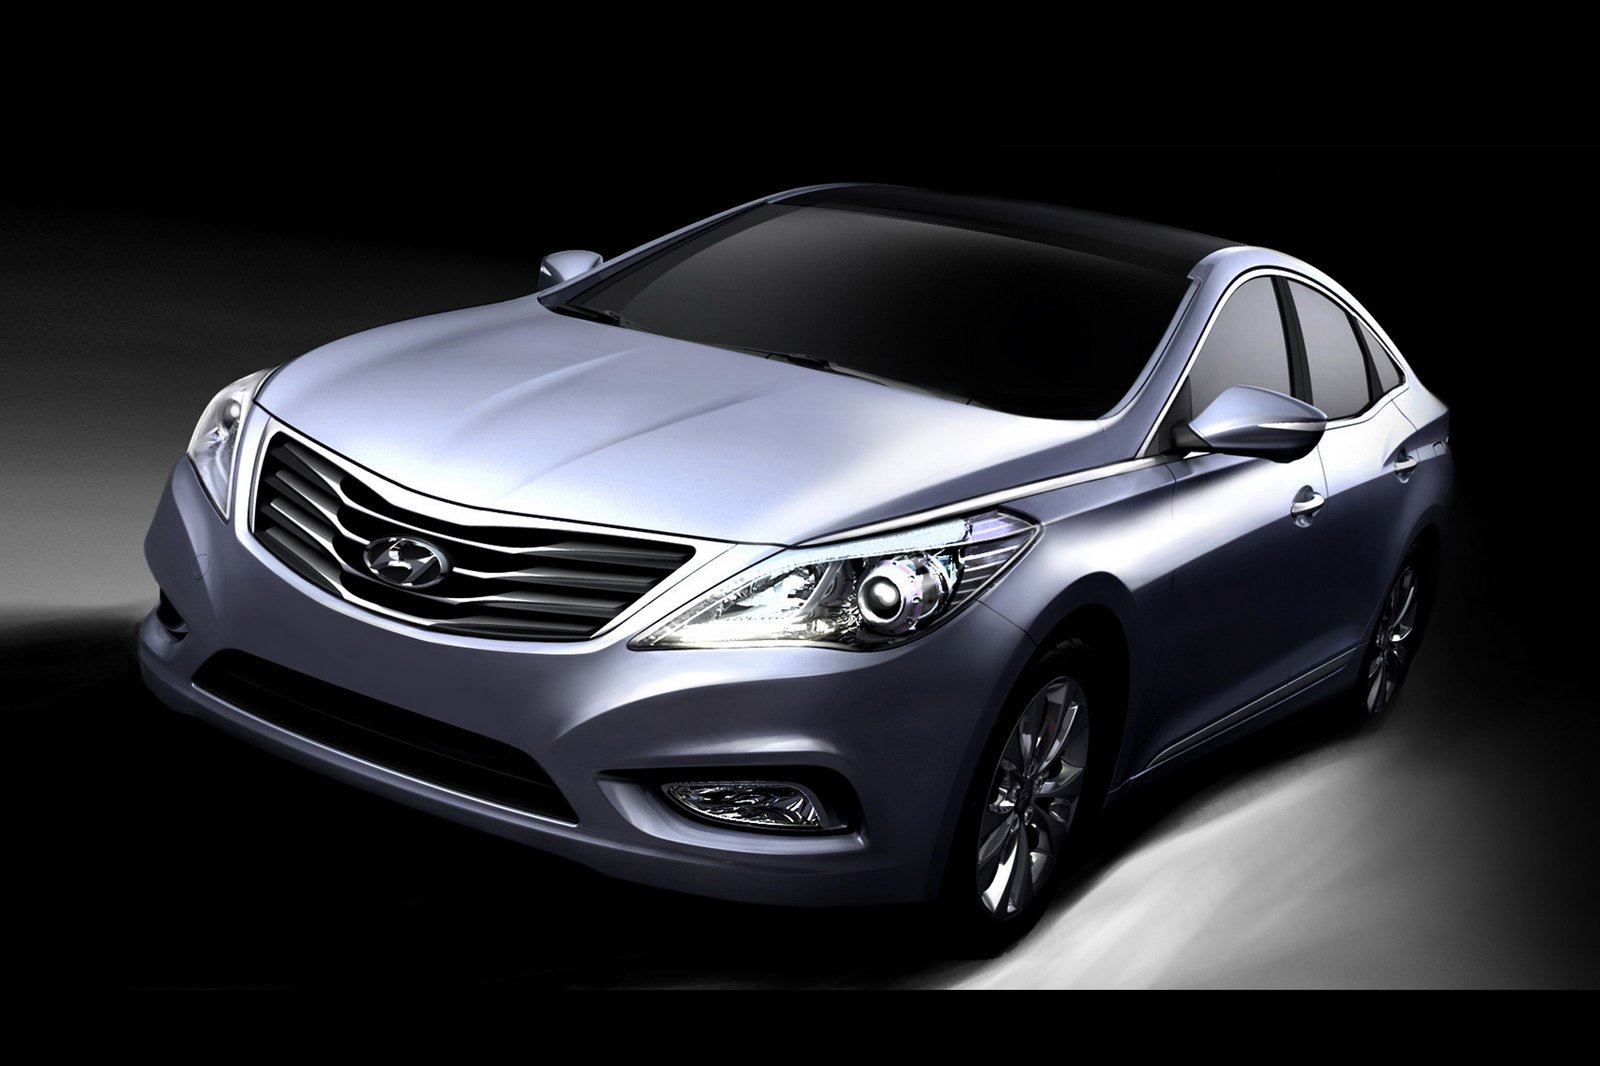 Hyundai Azera teased in sketches - debut next year? - paultan.org